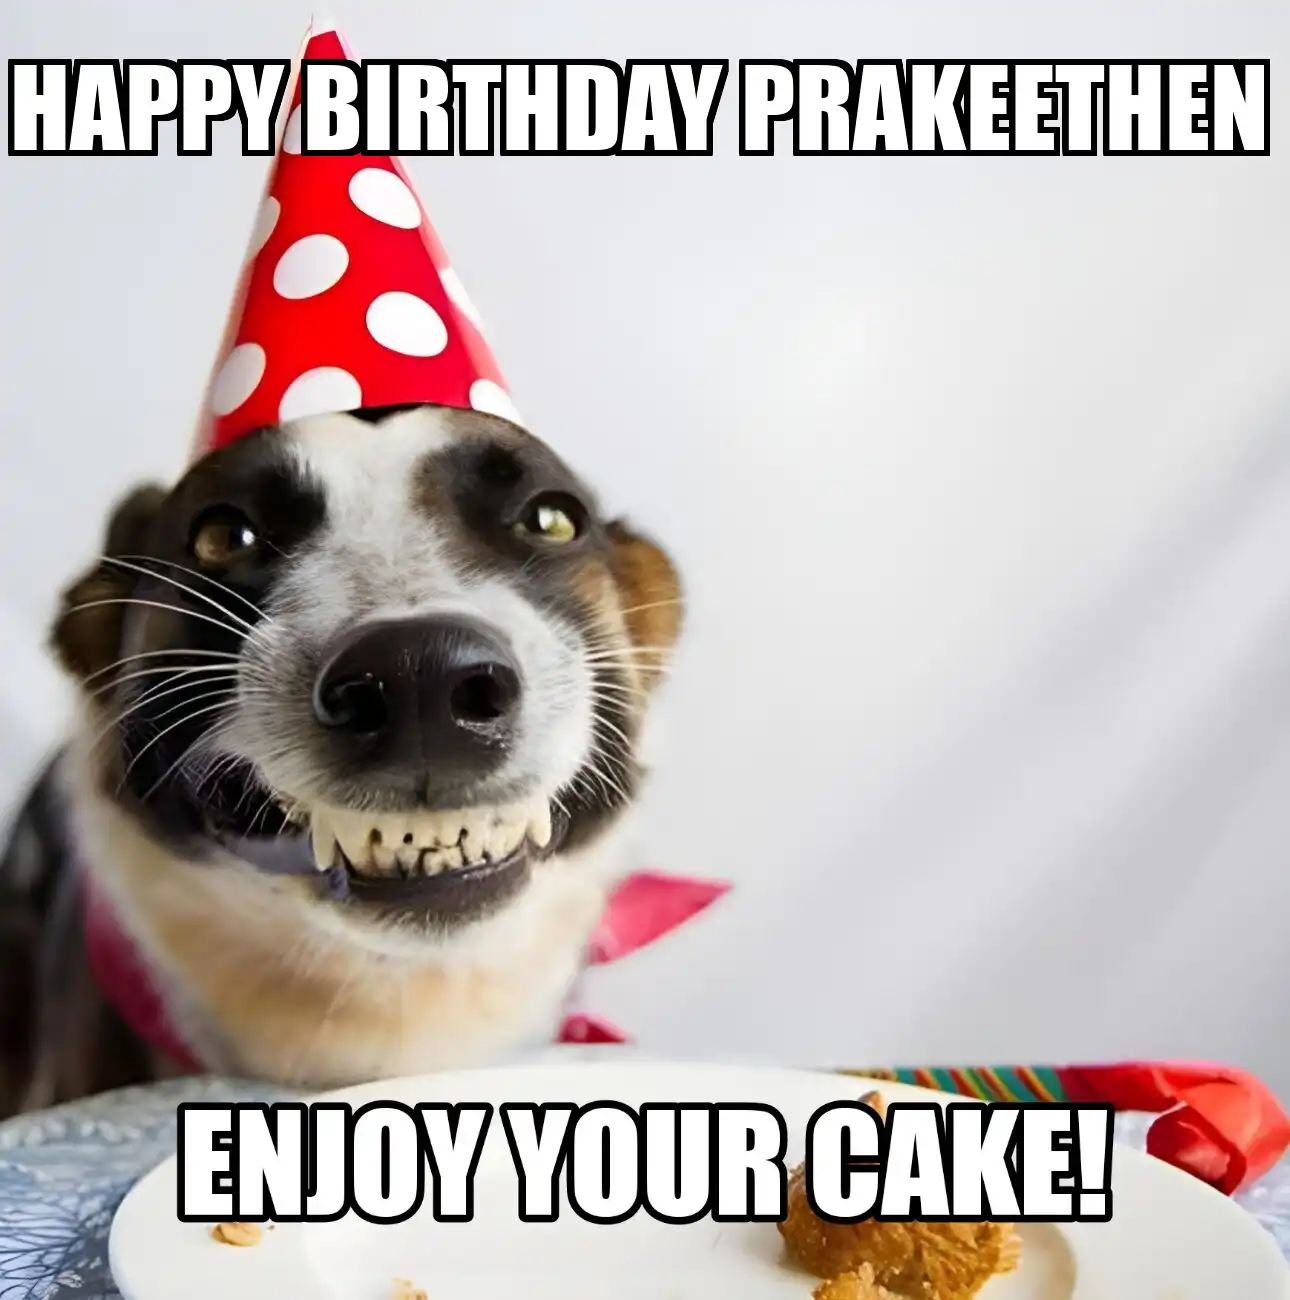 Happy Birthday Prakeethen Enjoy Your Cake Dog Meme